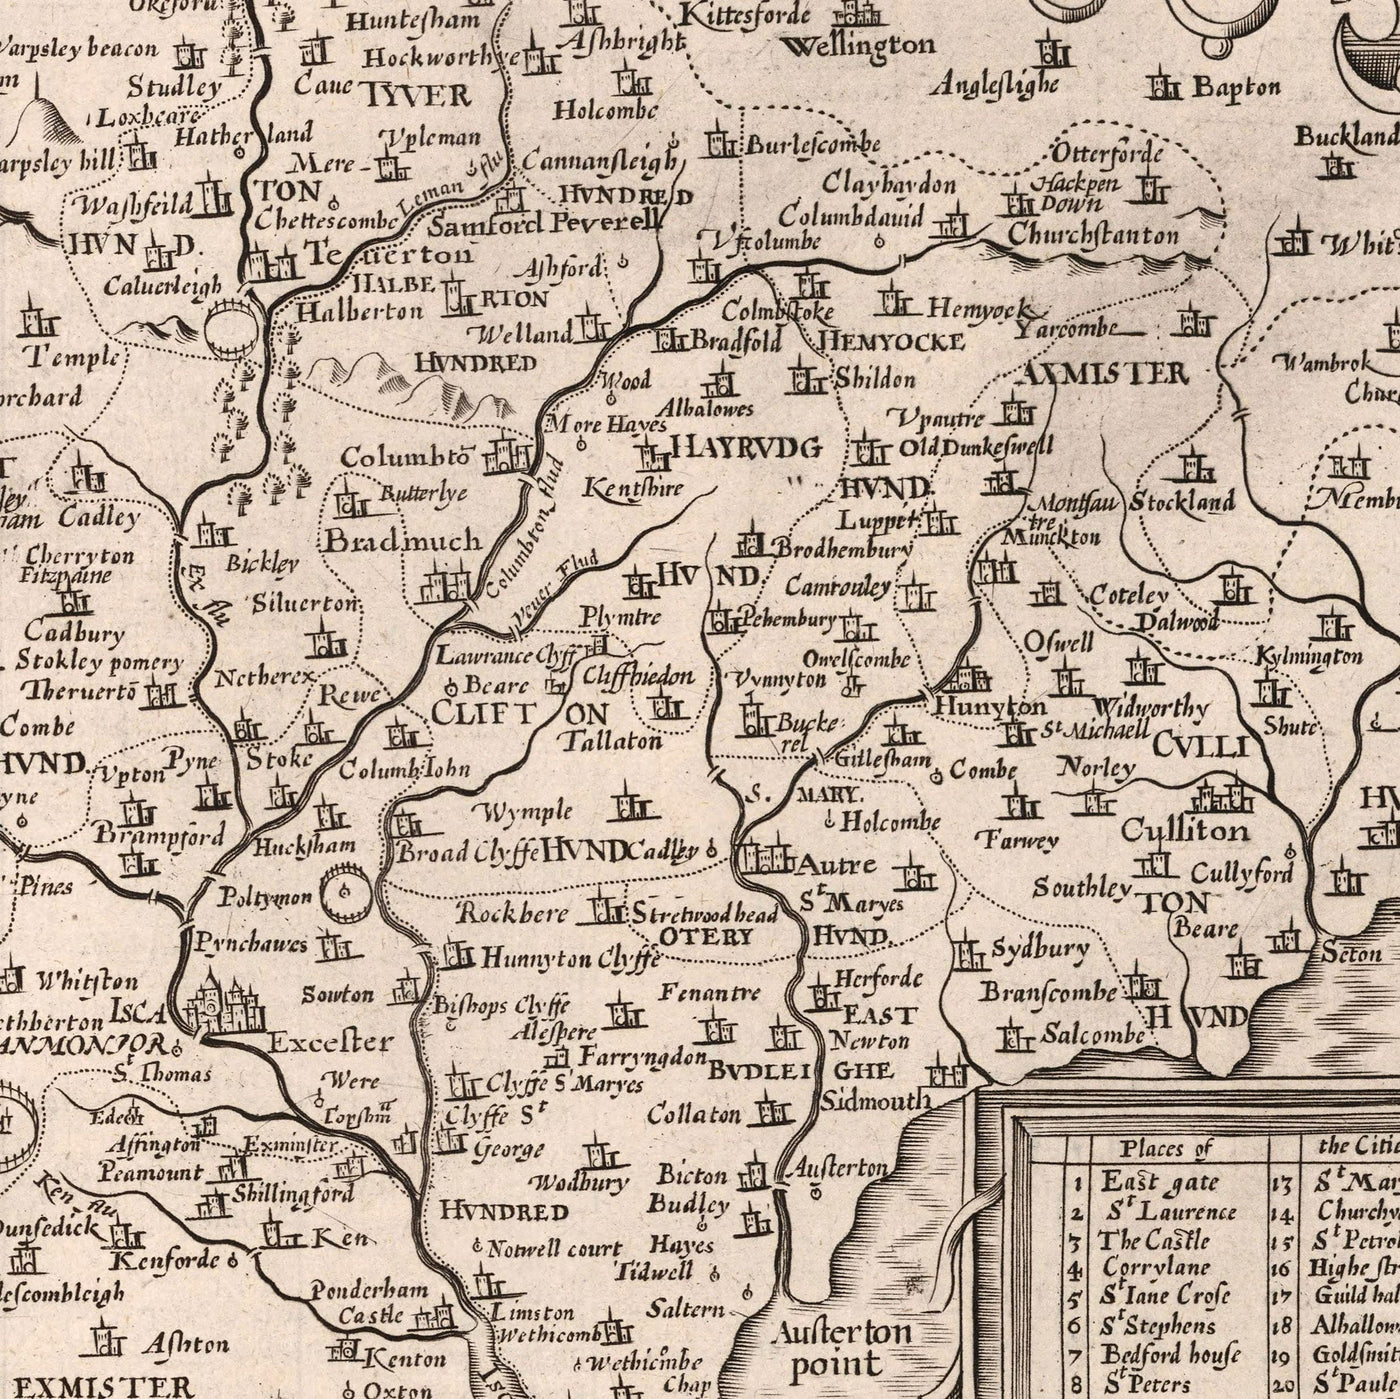 Alte Karte von Devon, 1611 von John Speed ​​- Plymouth, Exeter, Torquay, Paignton, Exmouth, Barnstaple